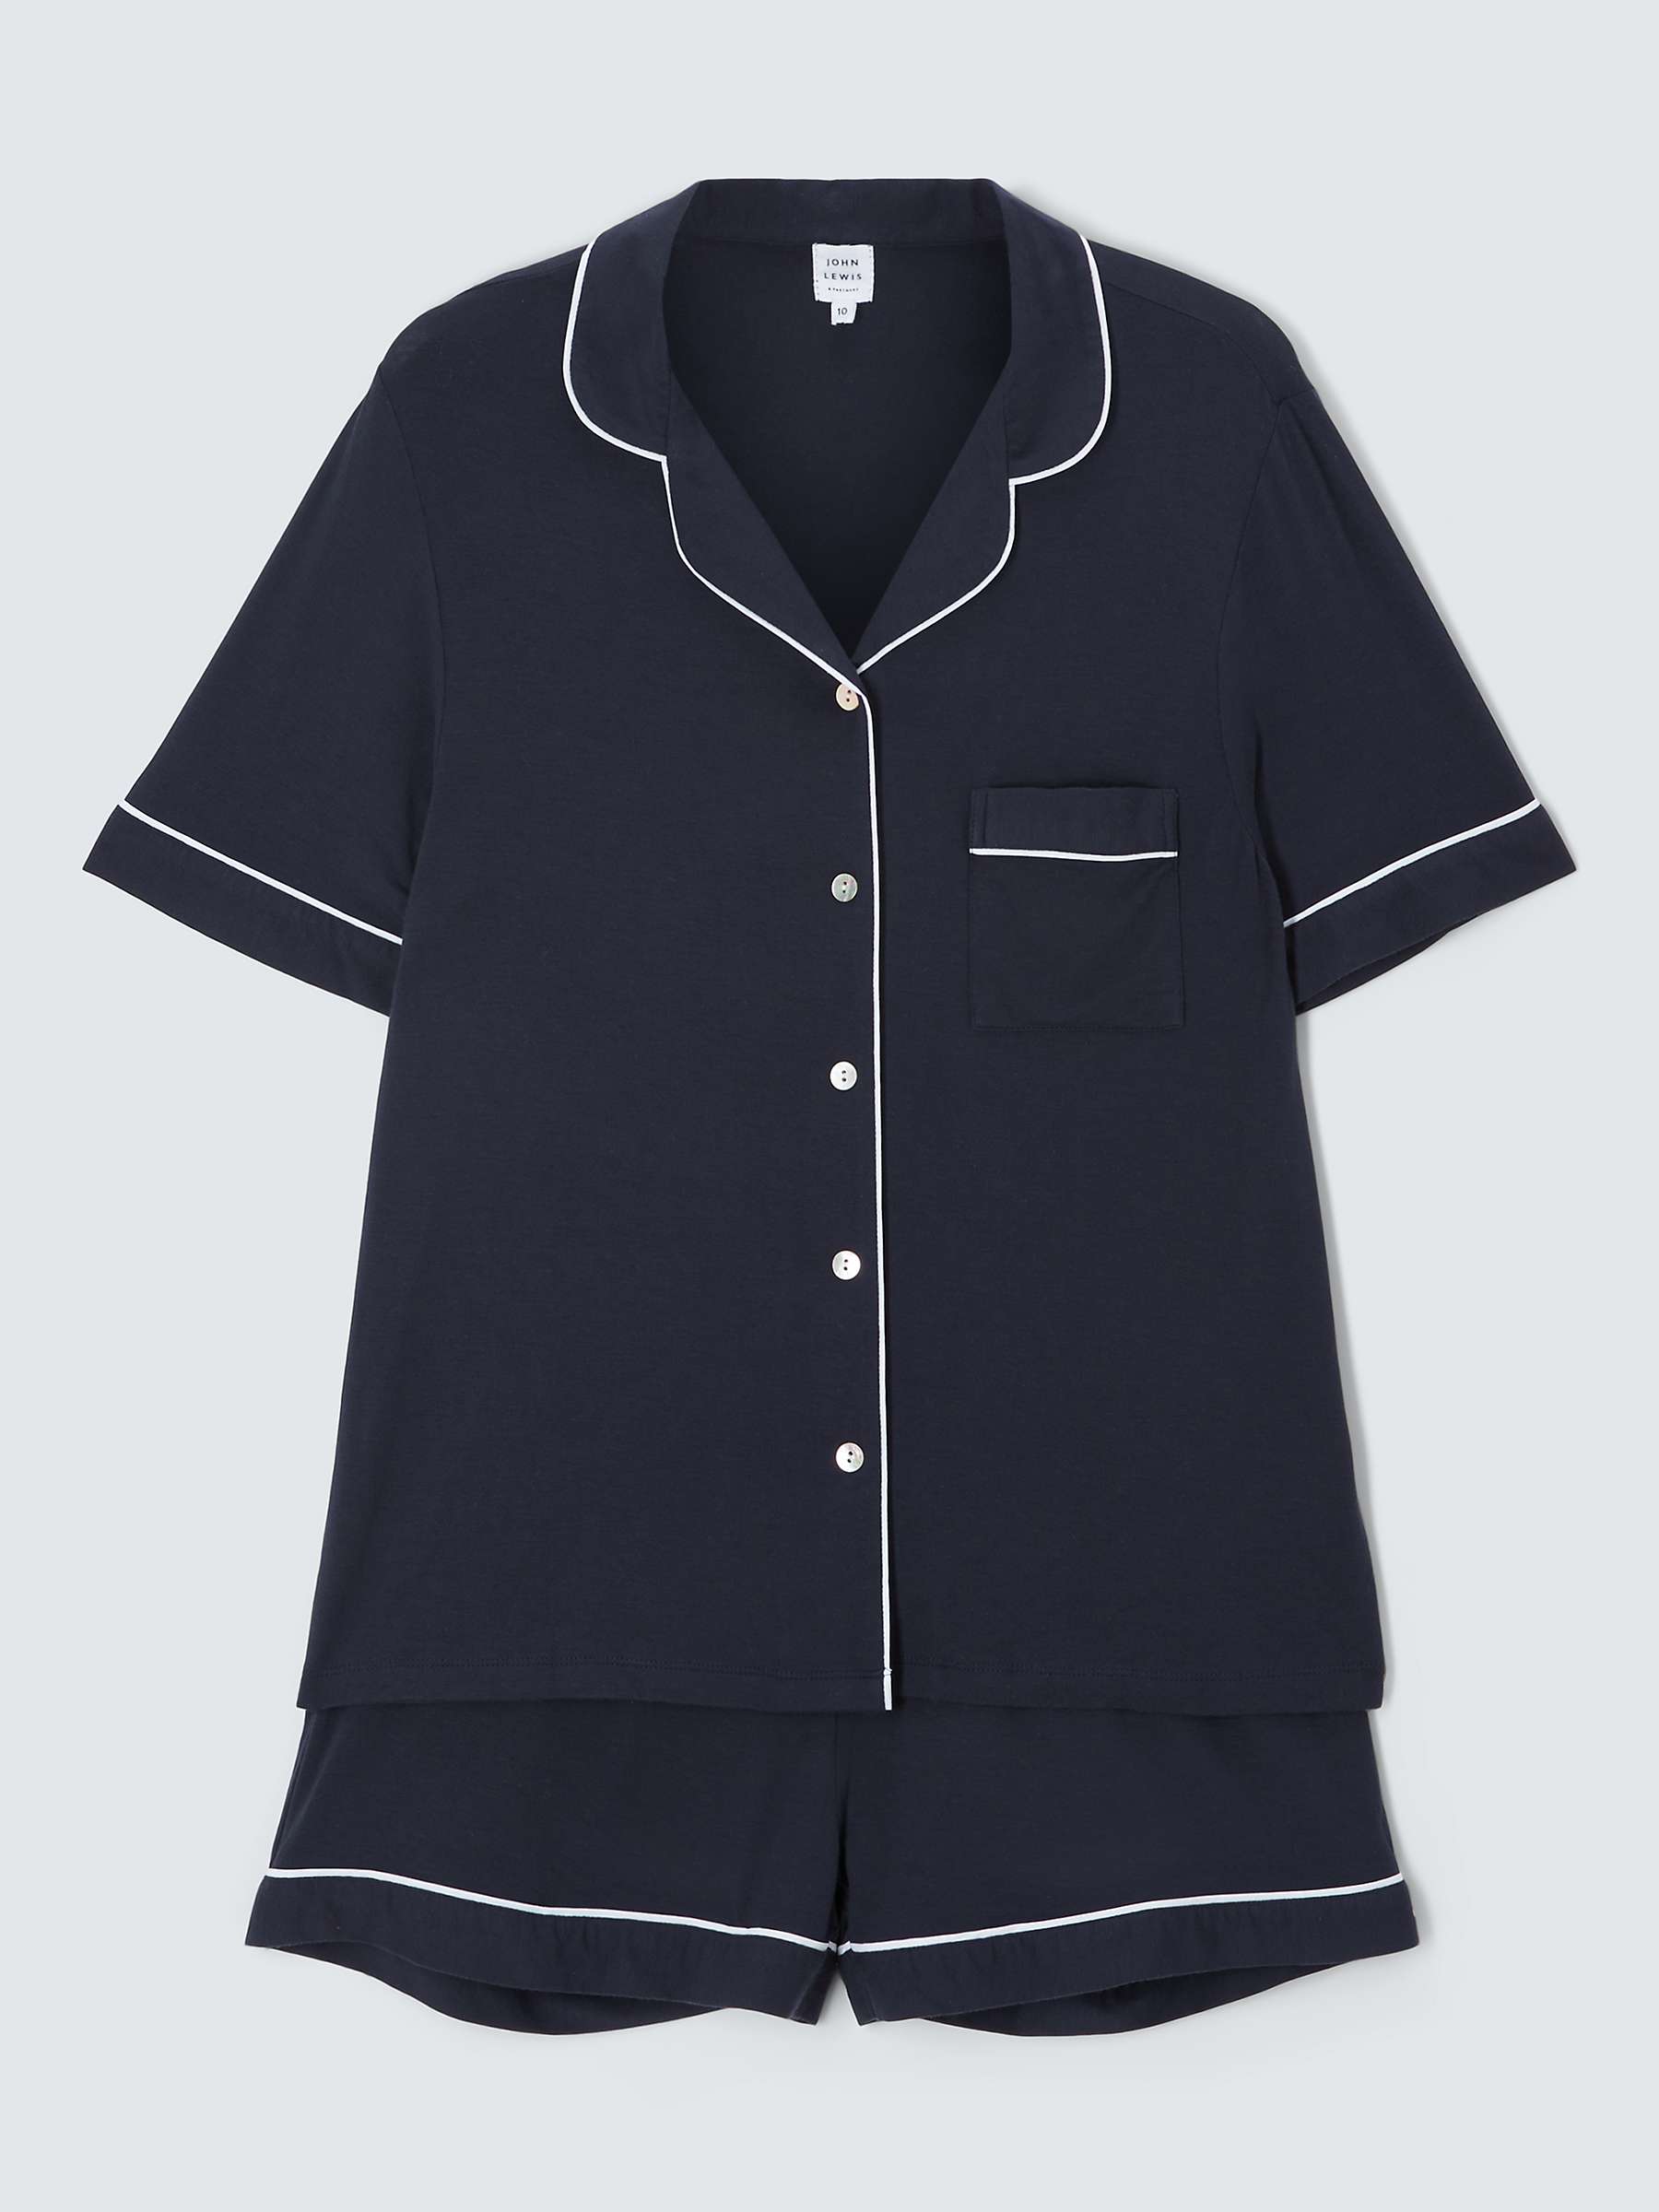 Buy John Lewis Aria Shirt Shorty Pyjama Set Online at johnlewis.com